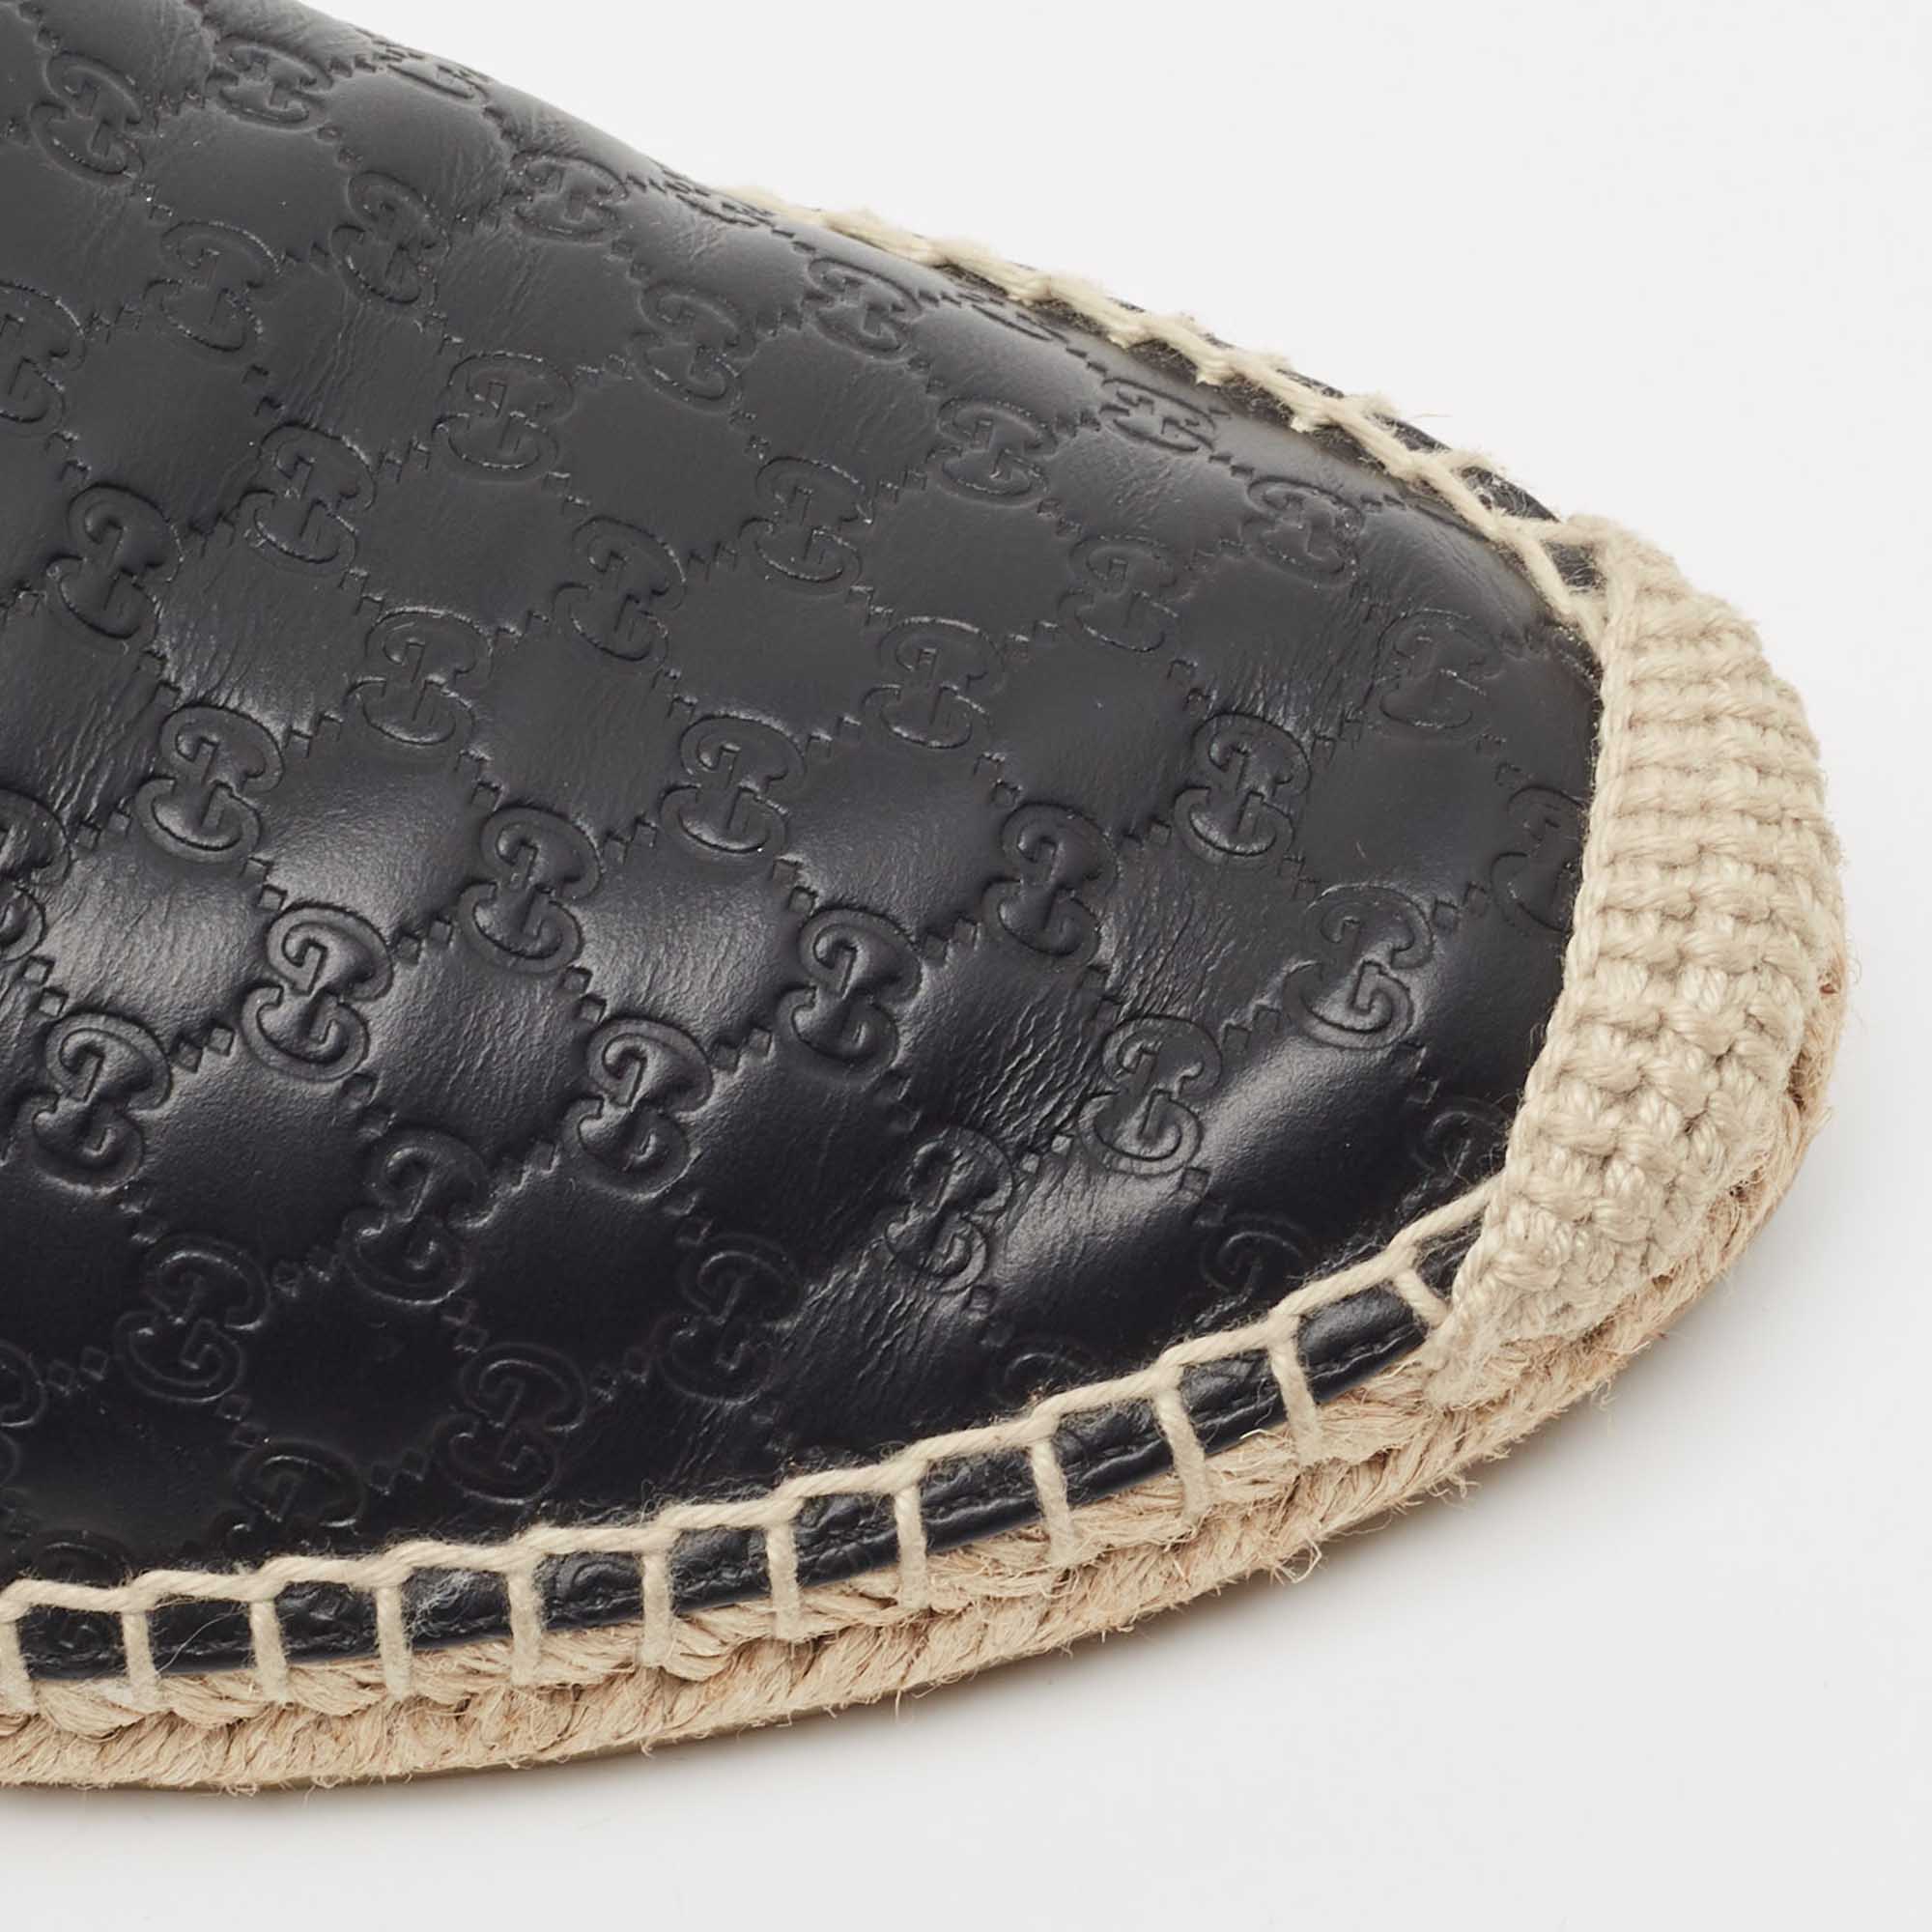 Gucci Black Microguccissima Leather Slip On Espadrille Flats Size 38